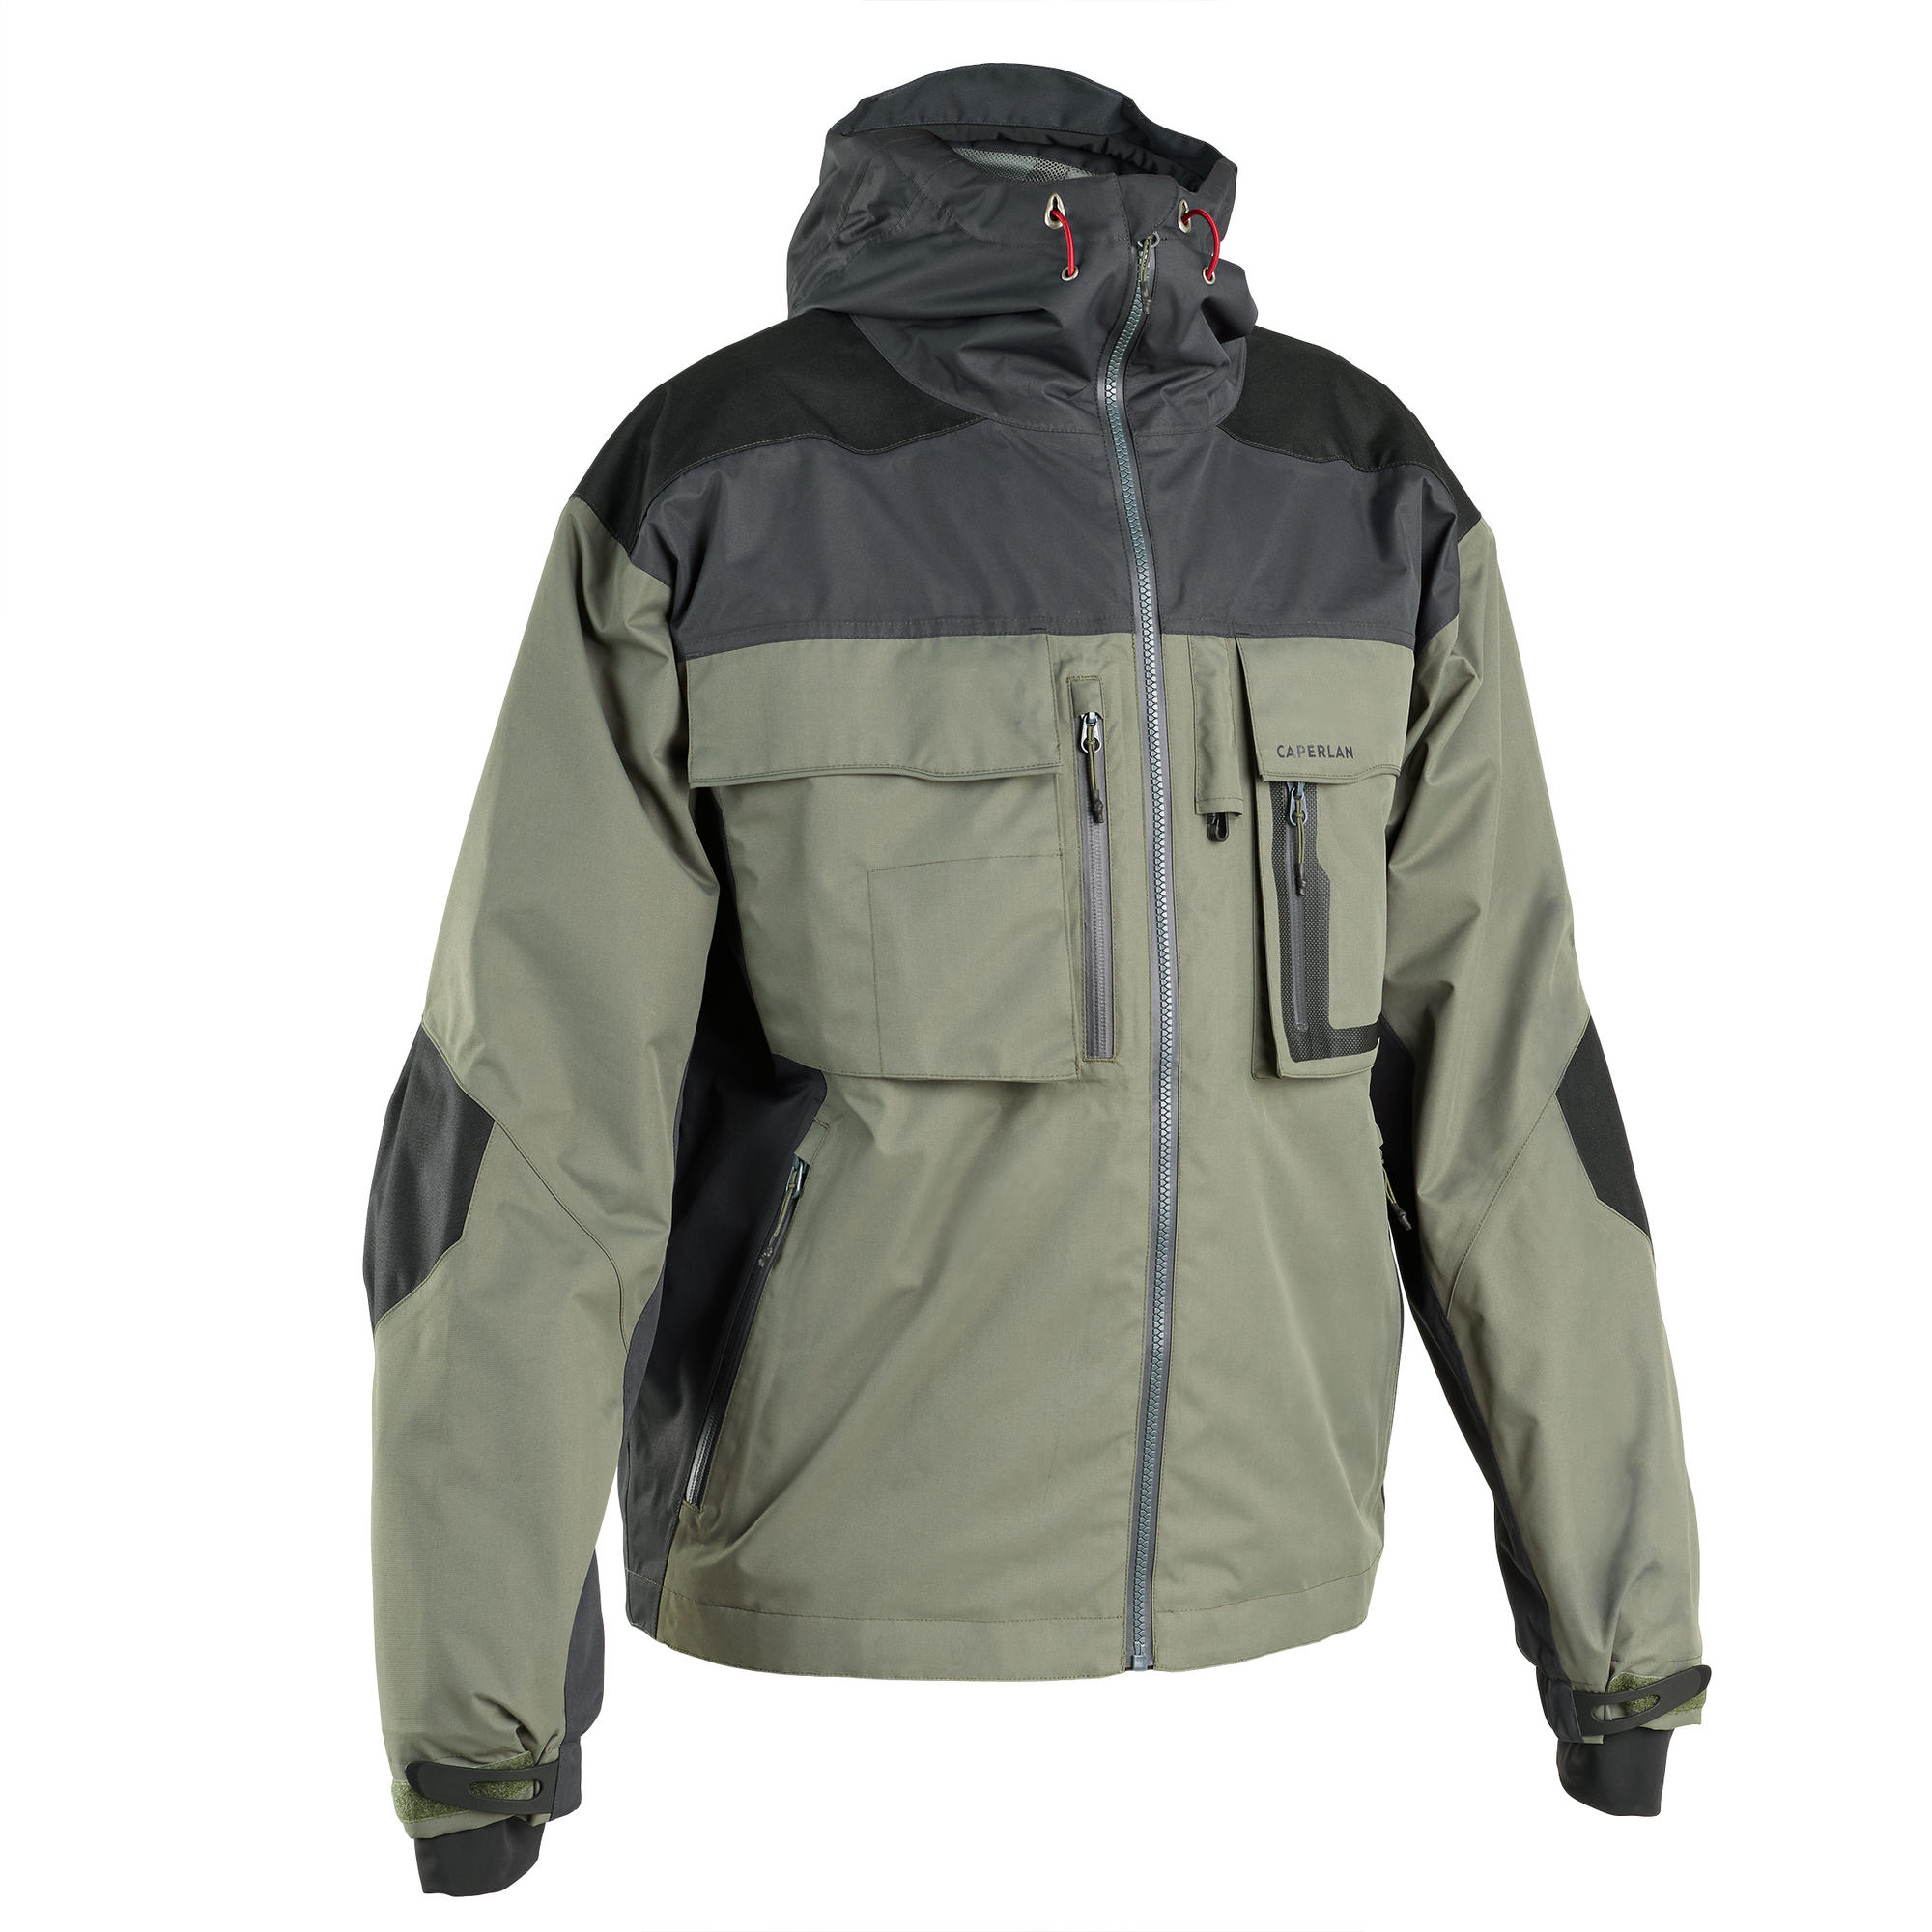 Fishing jacket 500 - Khaki | Caperlan